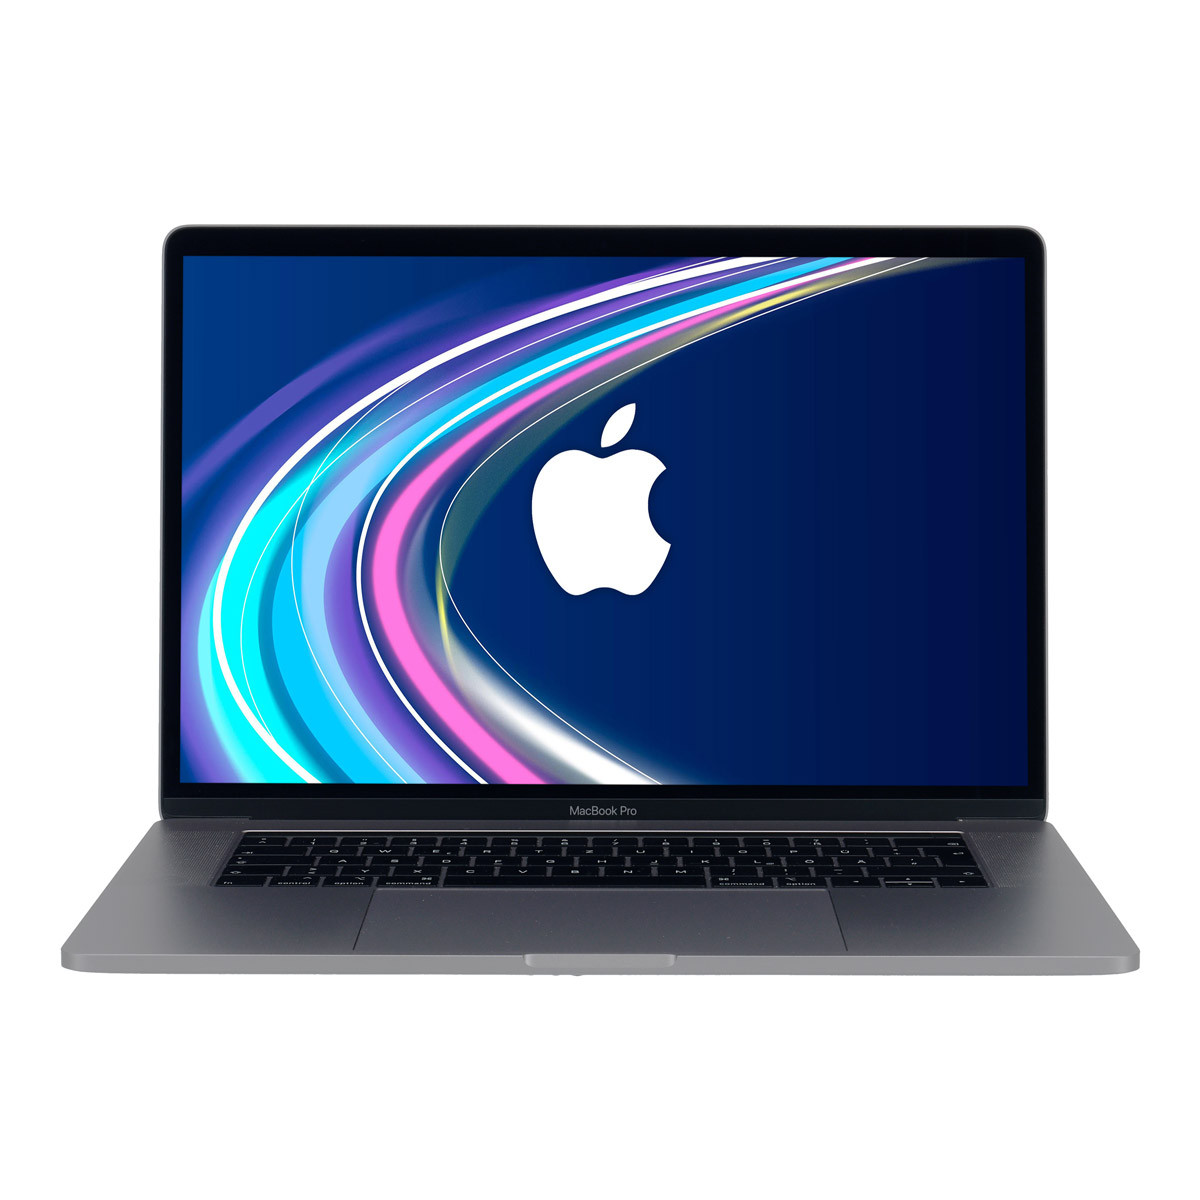 Apple MacBook Pro 15' 2018 Core i7 8750H 16 GB 500 GB SSD Webcam A